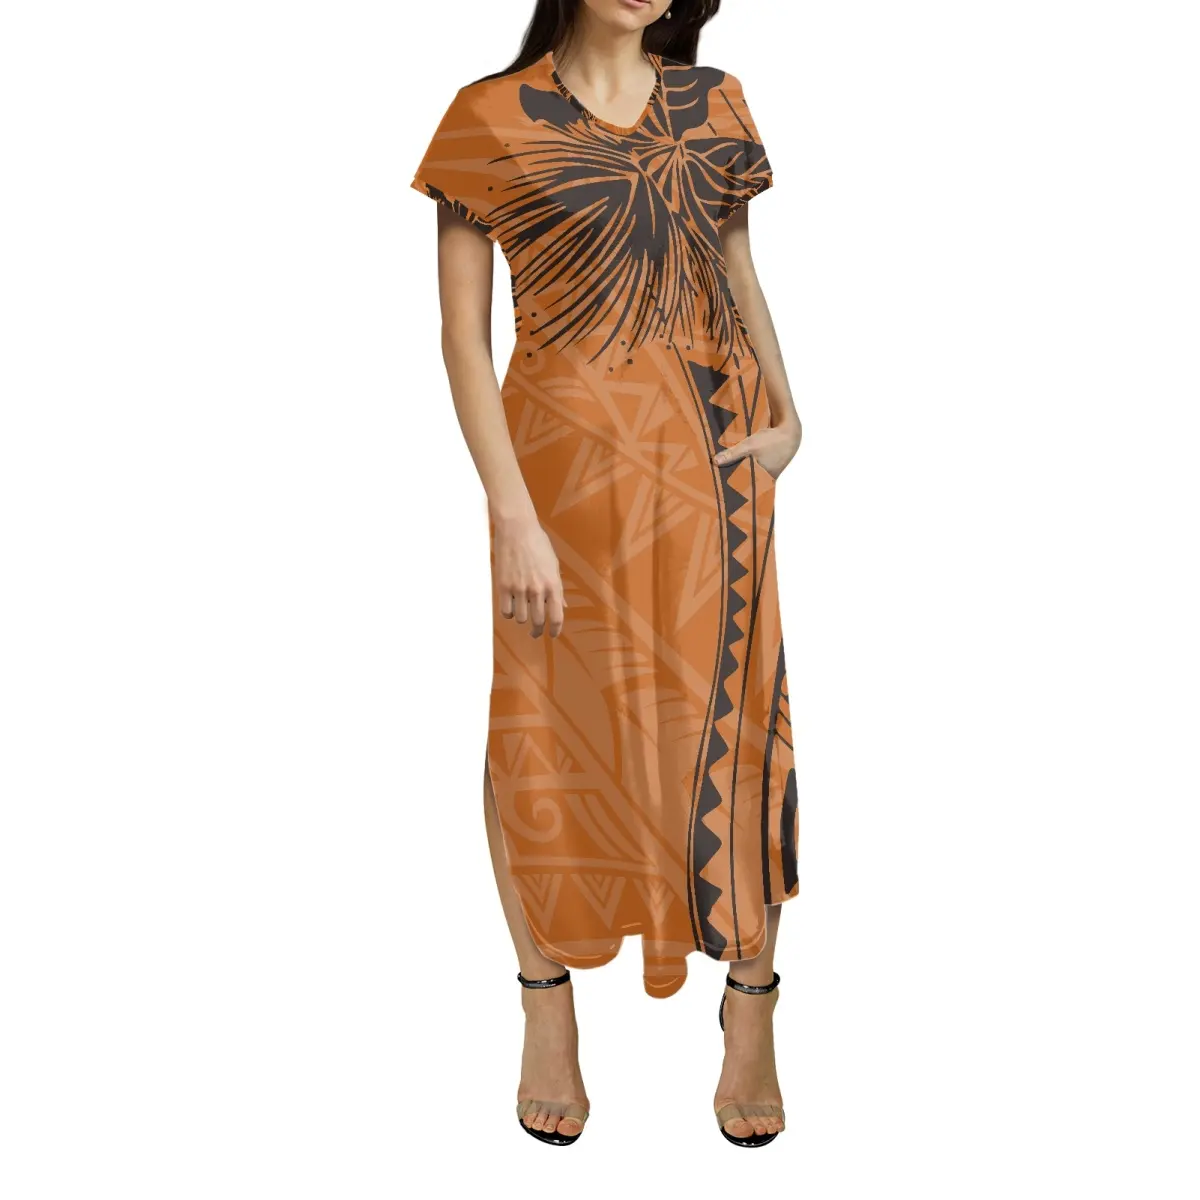 Hot Polynesian Palm Tree Samoan Tribal Print Vestido de mujer Sexy Slit Party Outfit con etiqueta privada personalizada Vestido de verano LOW MOQ